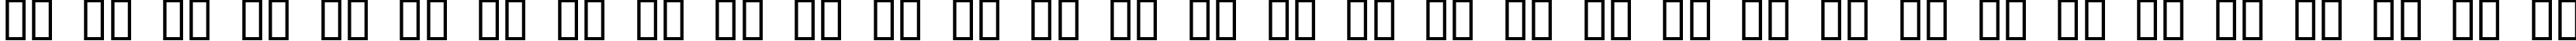 Пример написания русского алфавита шрифтом ZIPcode